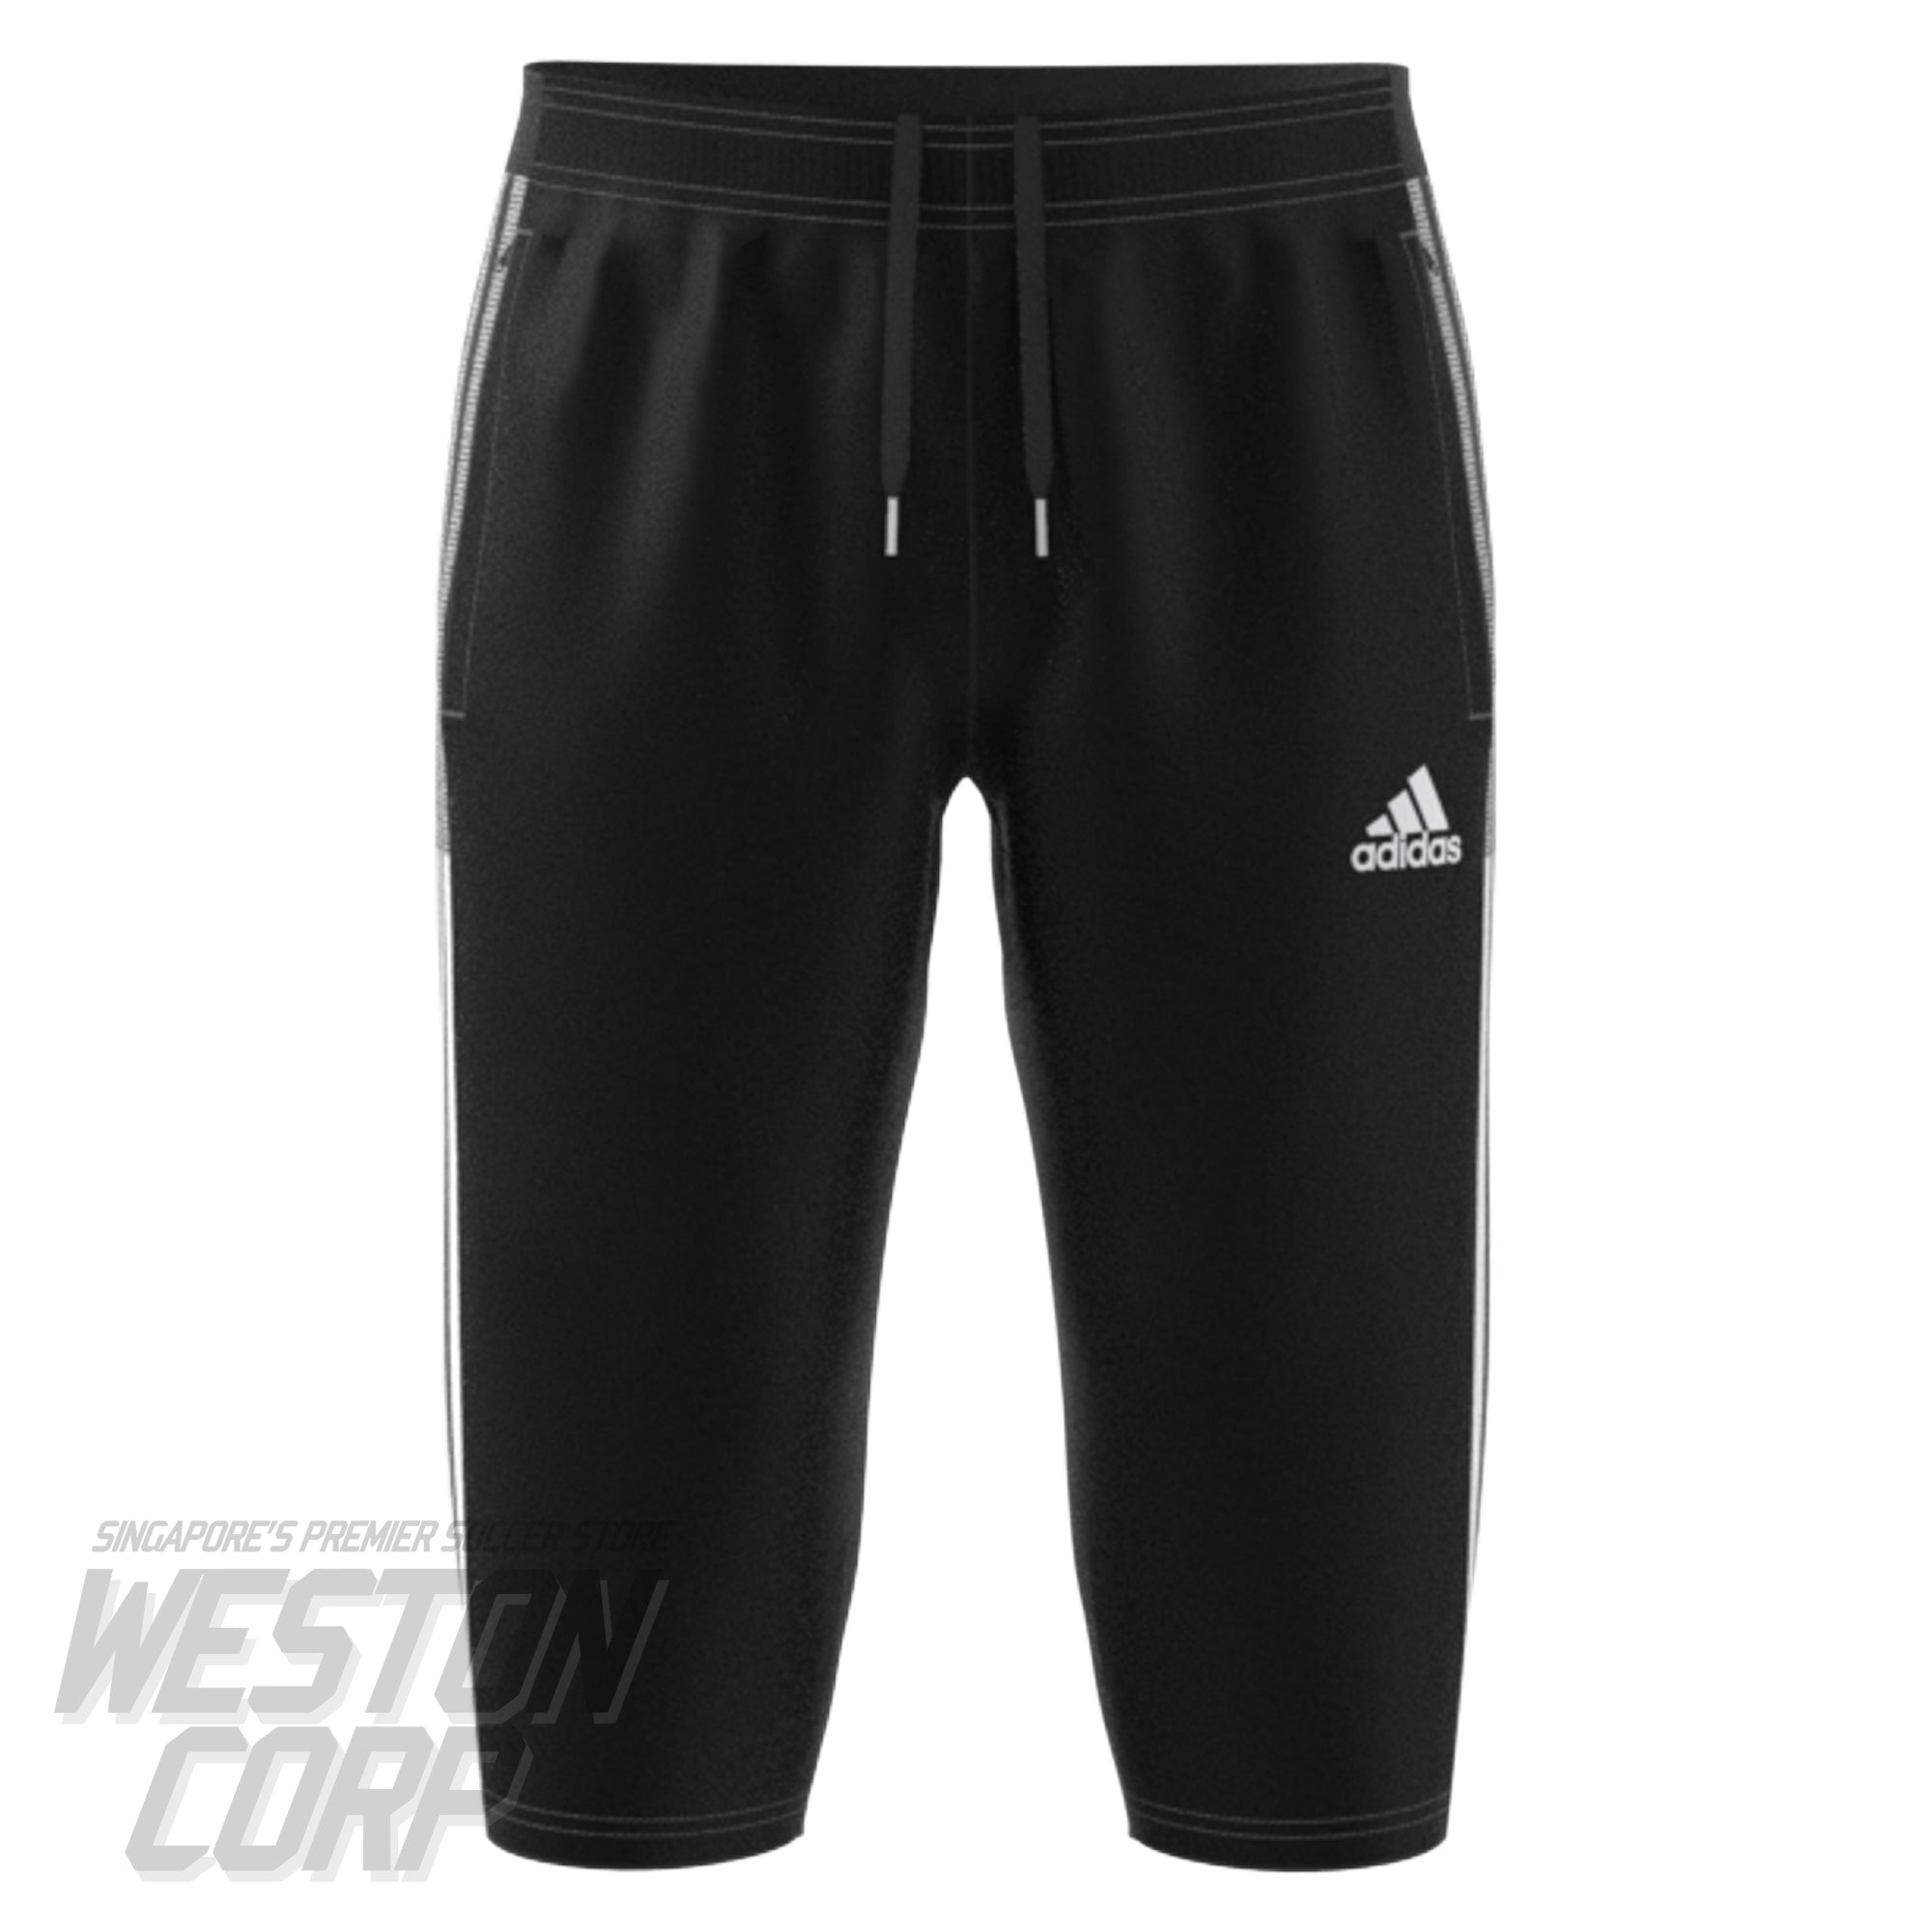 adidas Men's Tiro 19 3/4 Pants  Soccer pants, Adidas soccer pants